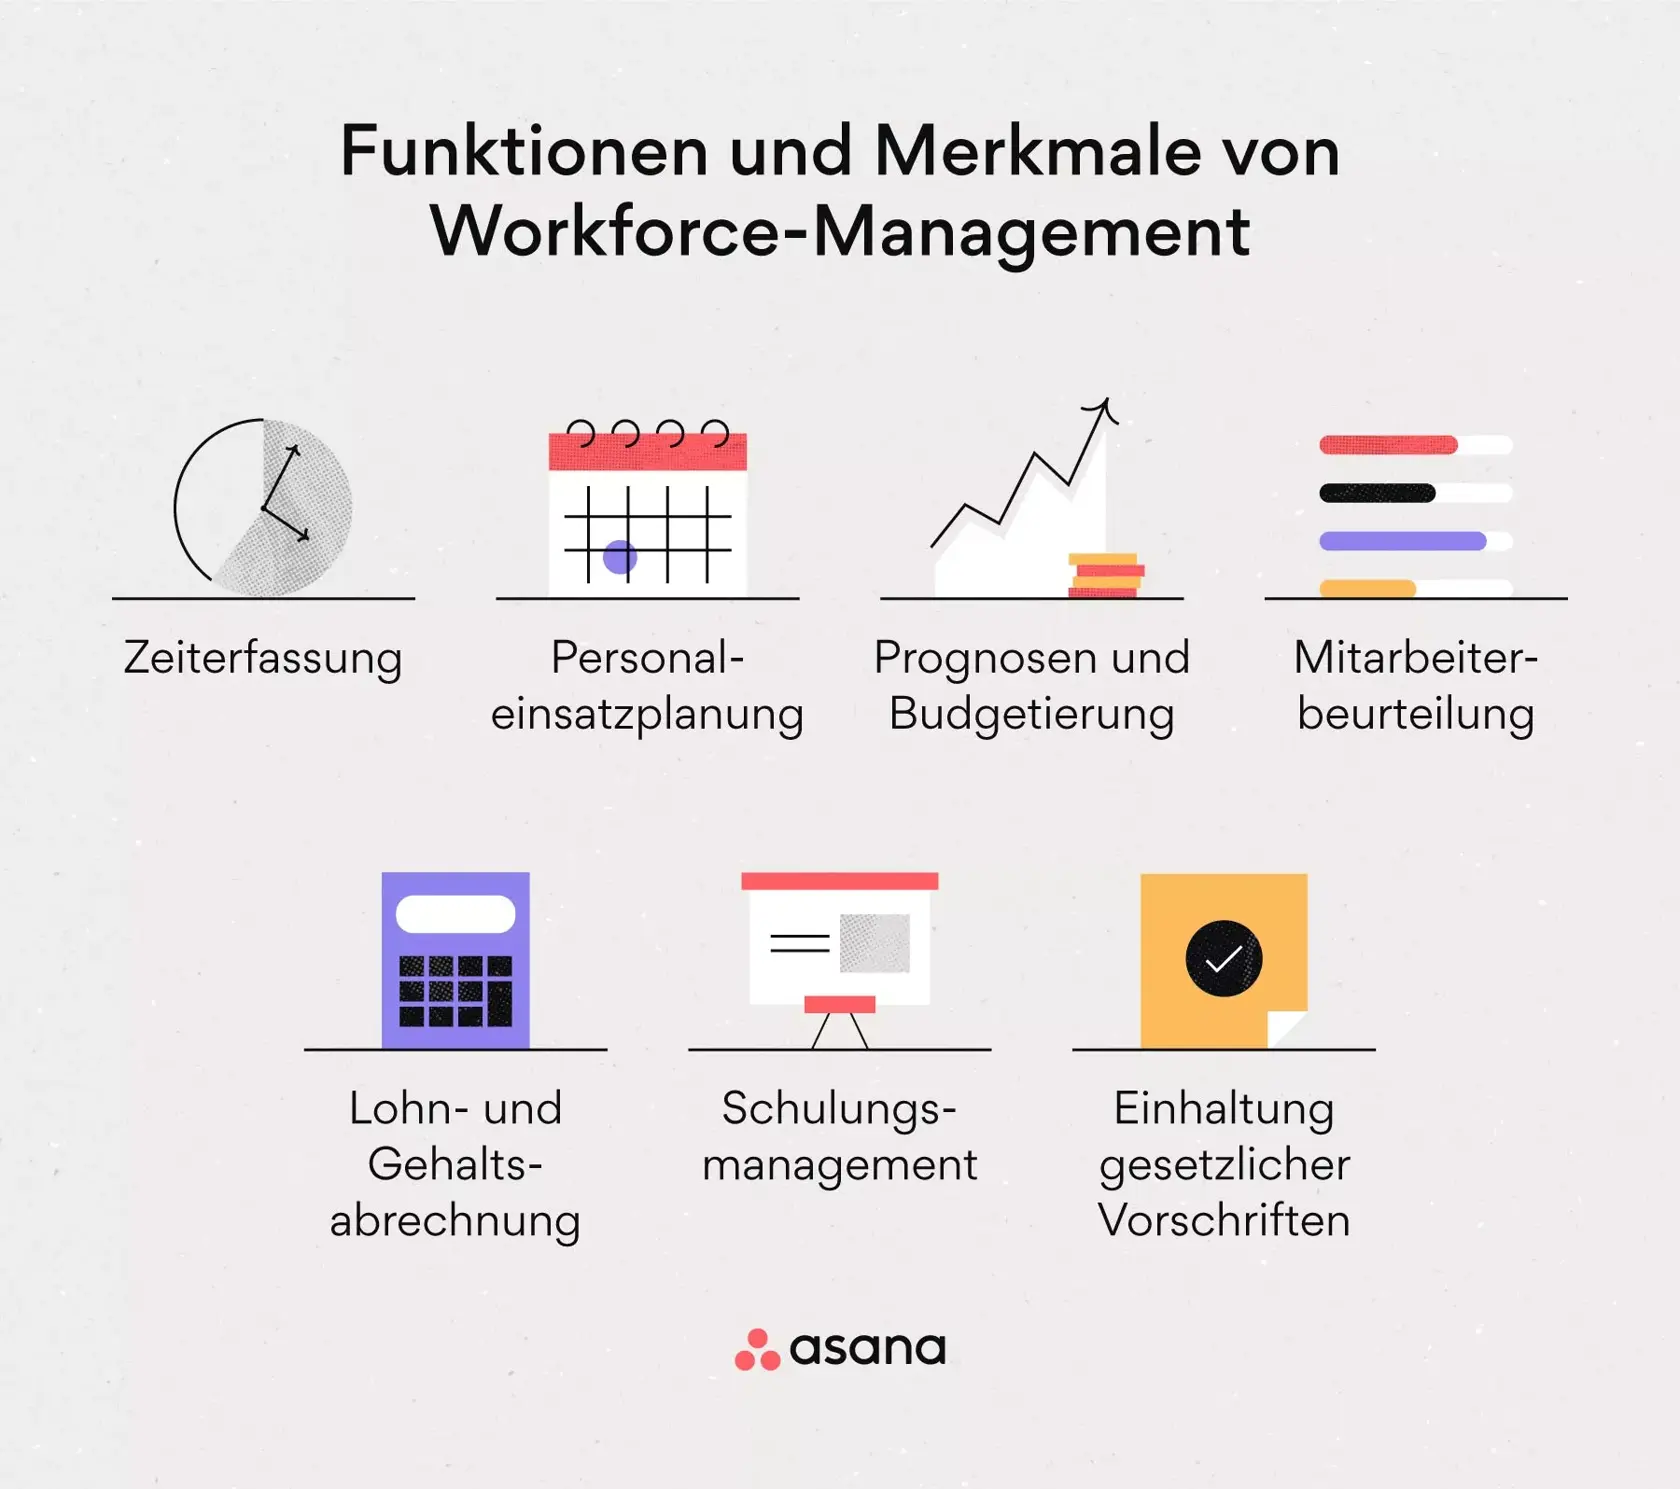 Workforce-Management-Tools